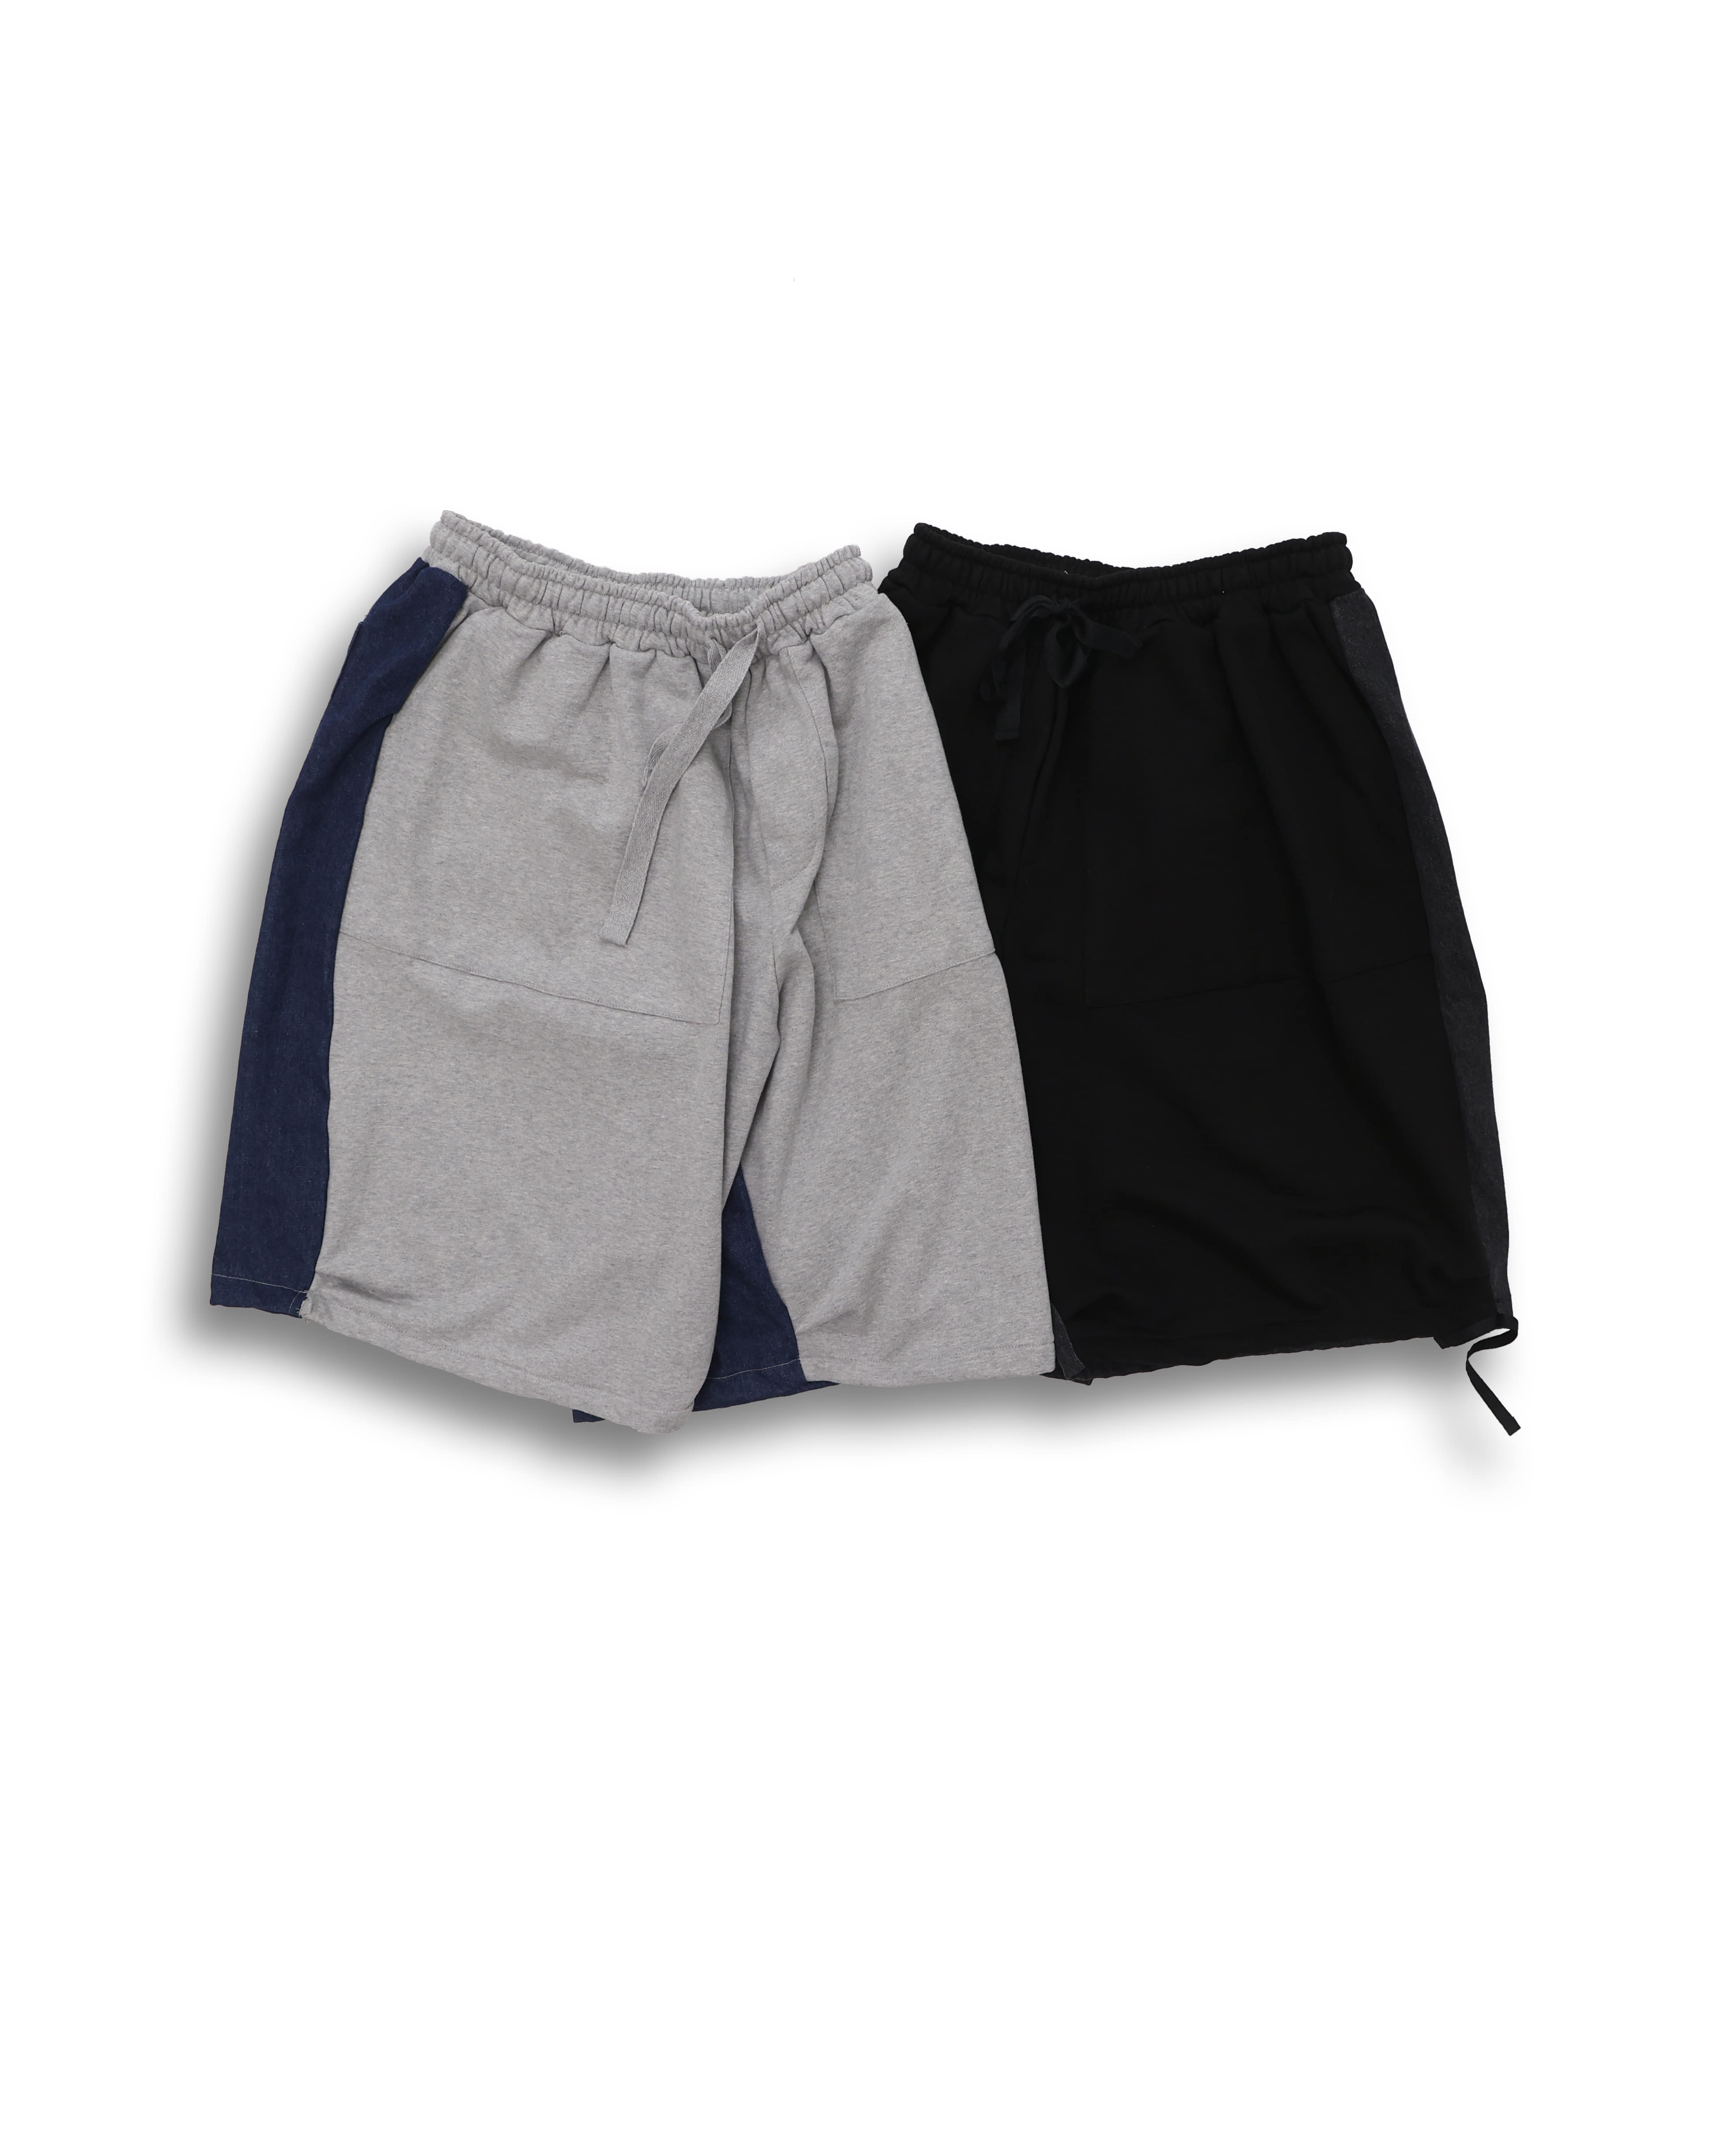 Mixed Denim Sweat Strap Half Pants (Black/Gray)